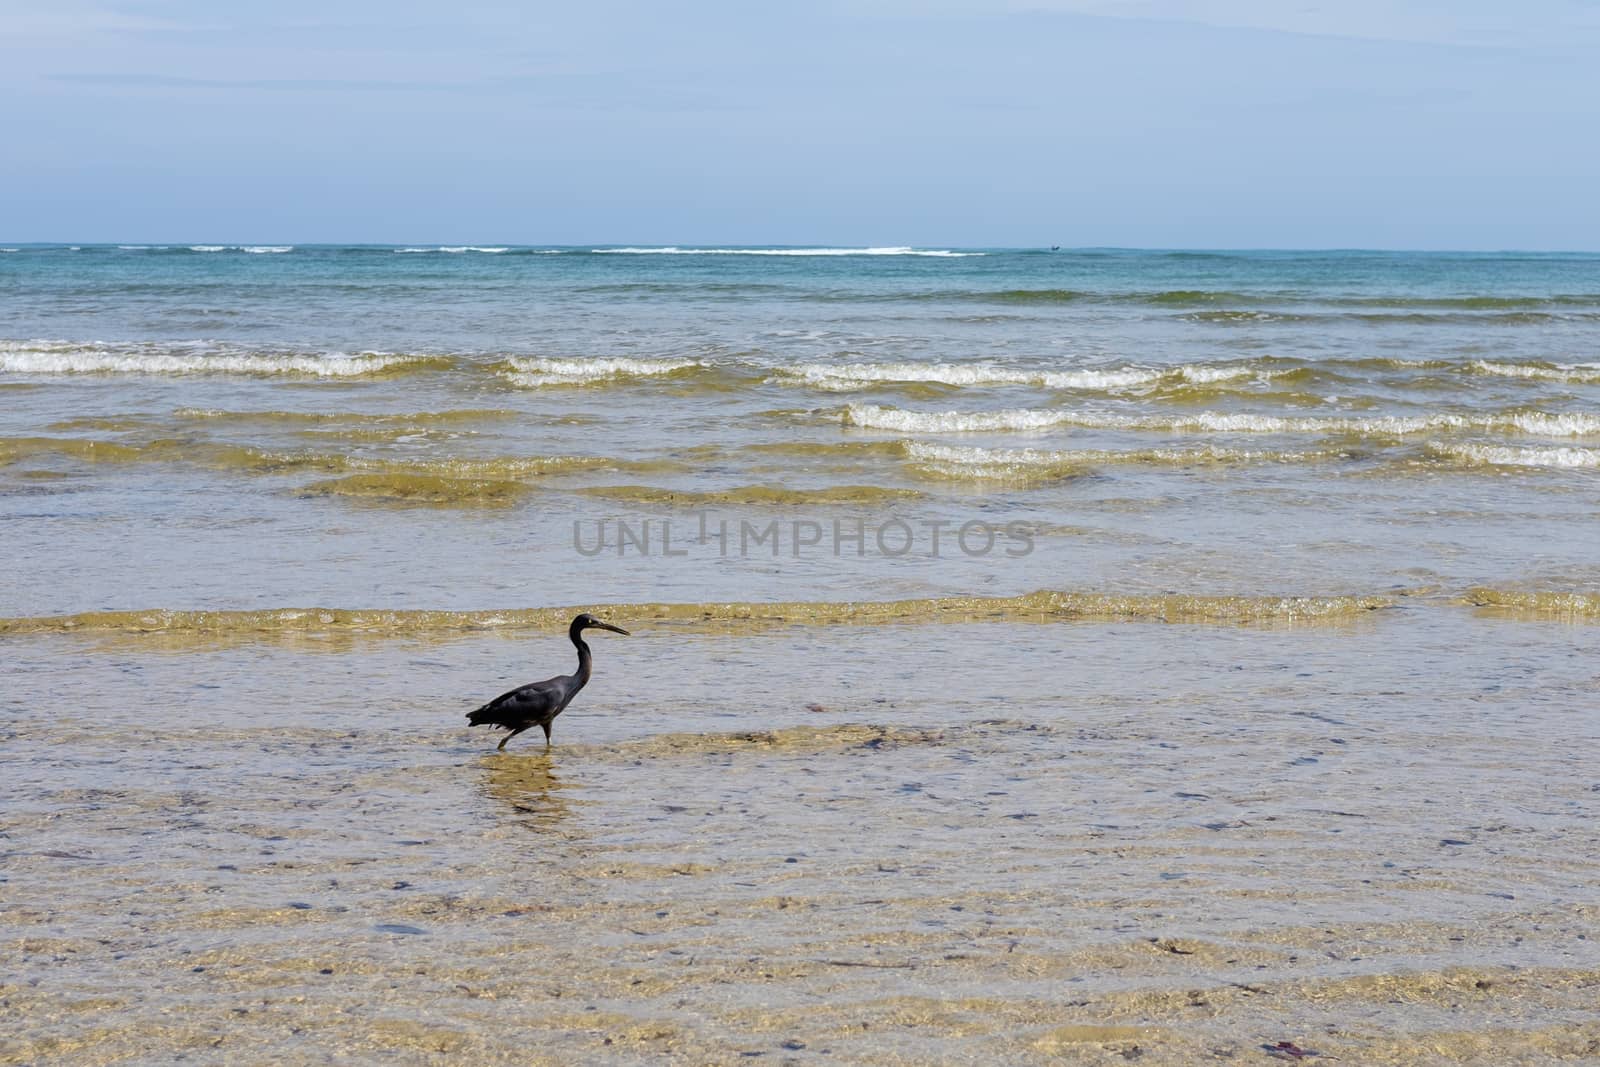 Black heron in the sea waves. Thailand. Phuket